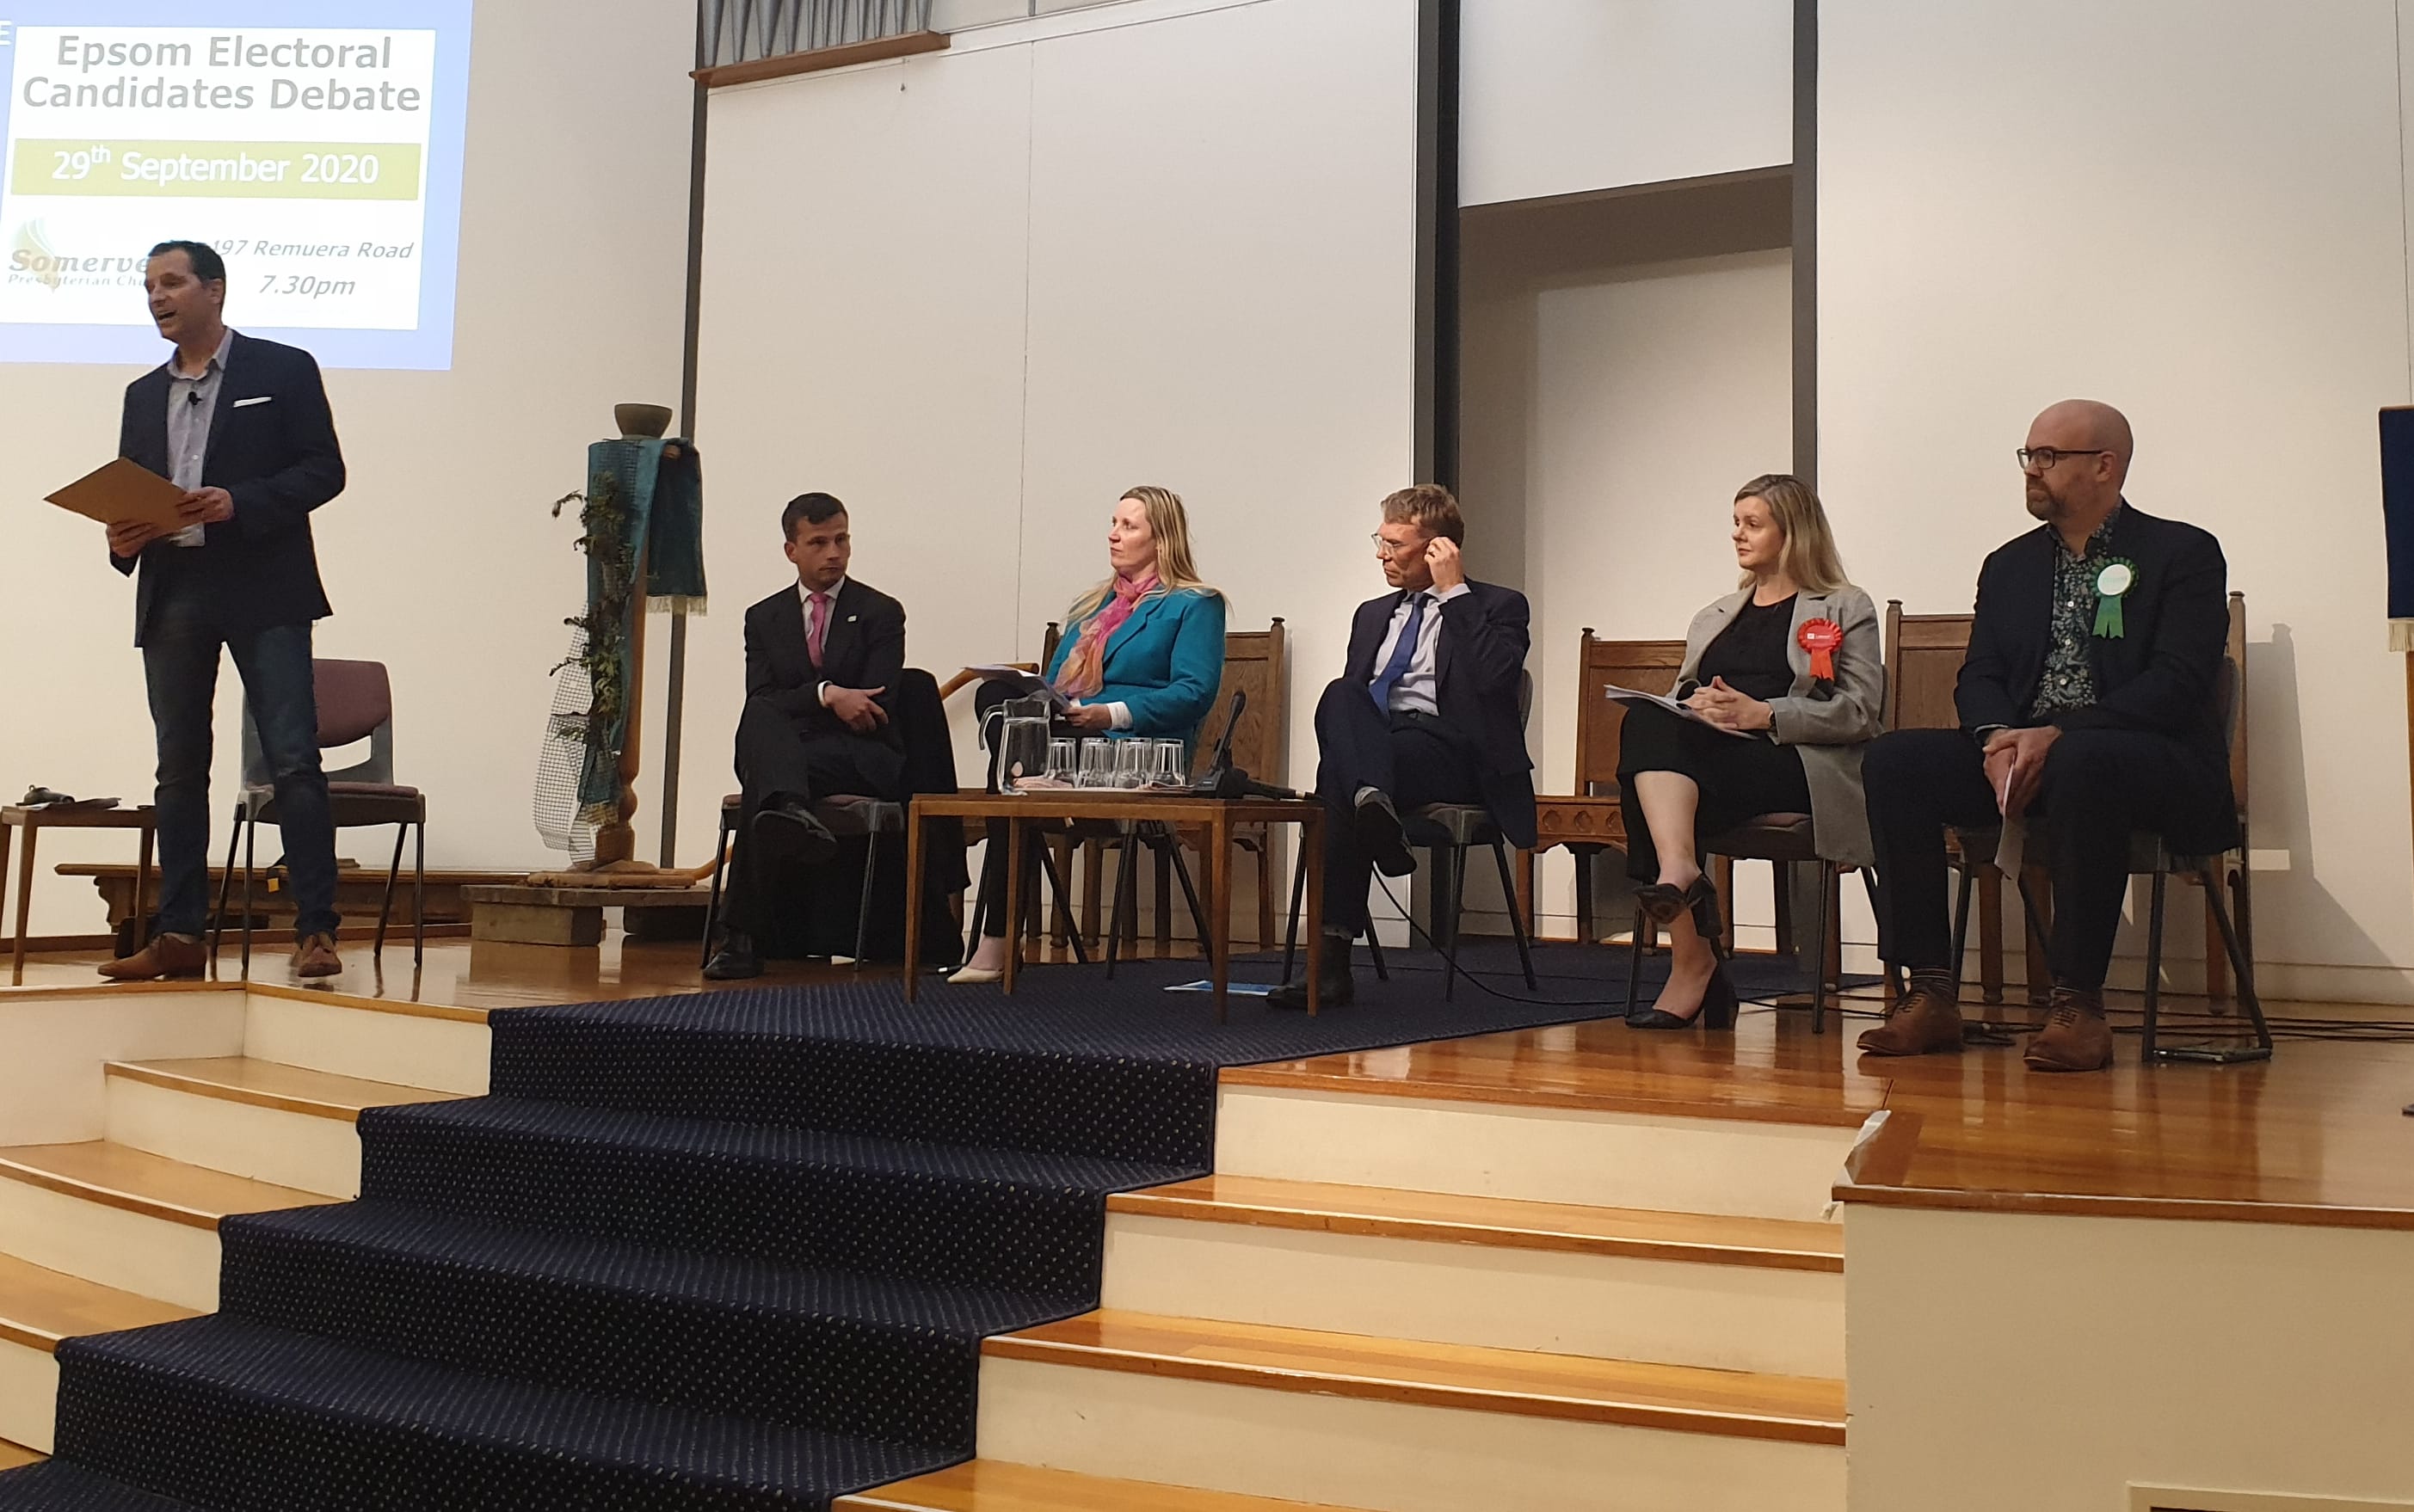 David Seymour, Faith-Joy Aaron, Paul Goldsmith, Camilla Belich and Kyle MacDonald at the Epsom electorate debate, moderated by Tim Watkin.